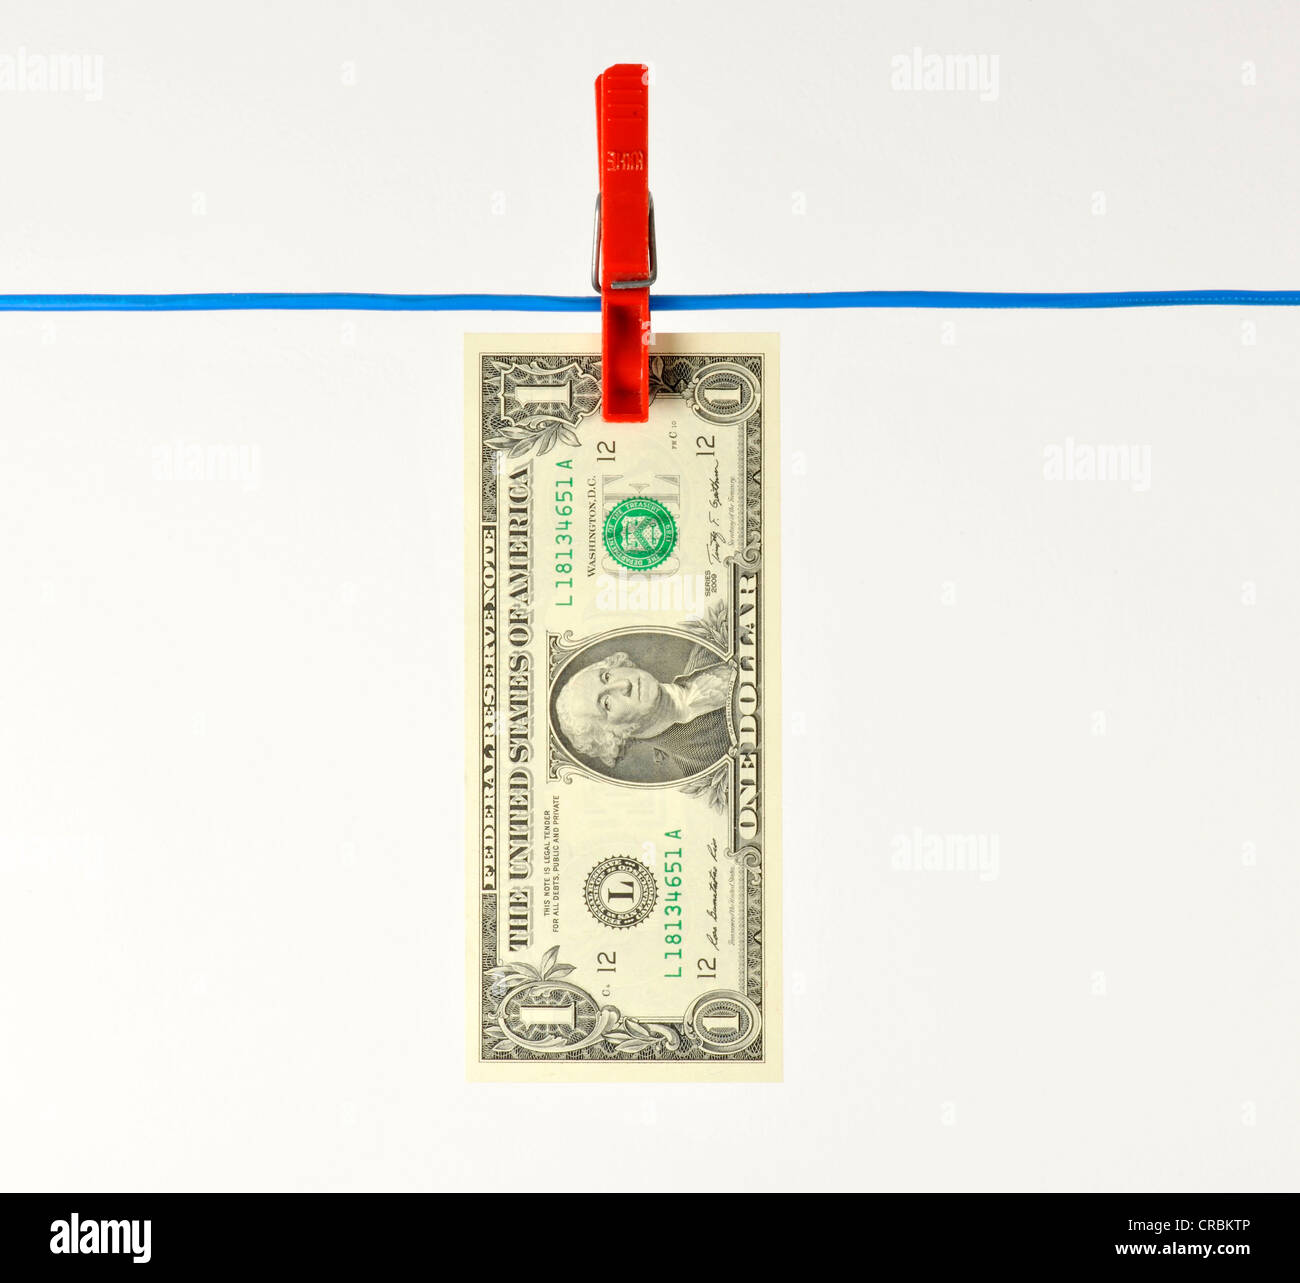 U.S. dollar bank note on a clothesline, symbolic image for money laundering, dirty money Stock Photo